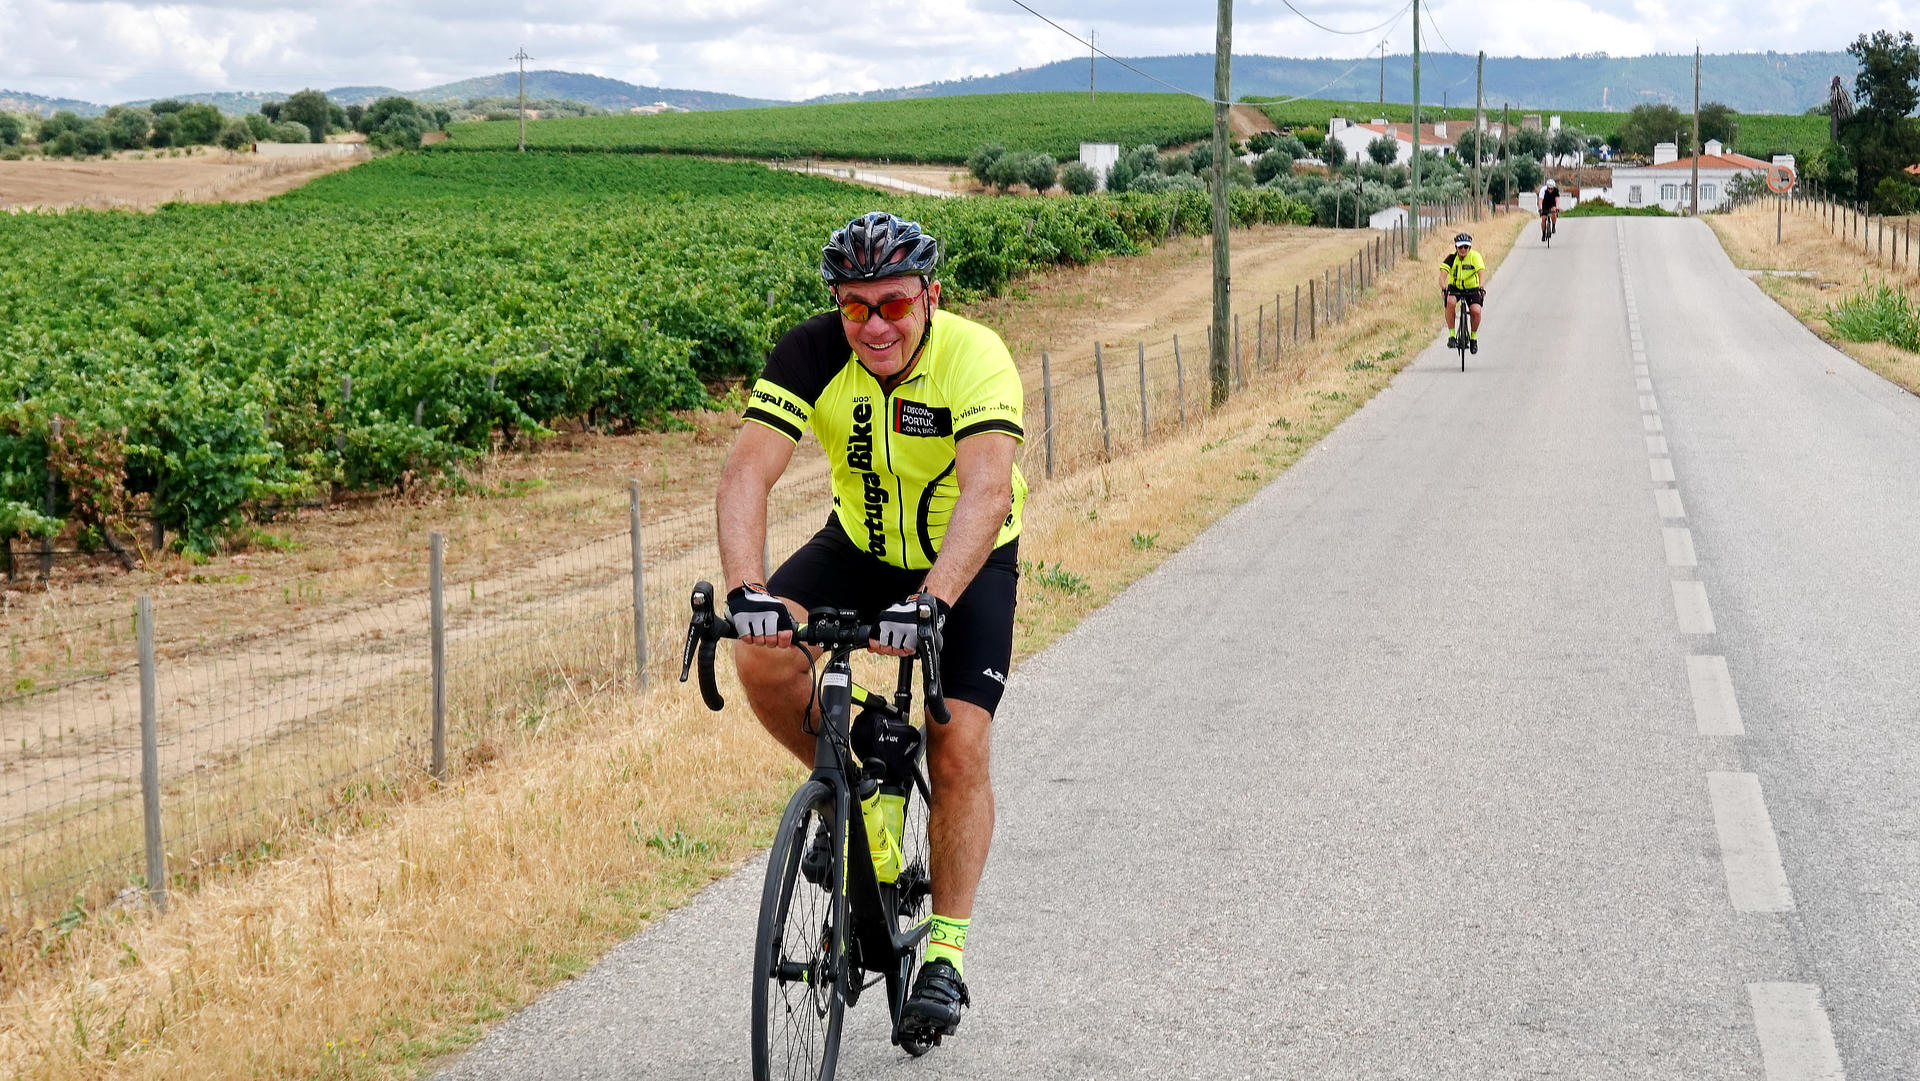 Cycling the Alentejo Wine Region vineyards Open Views